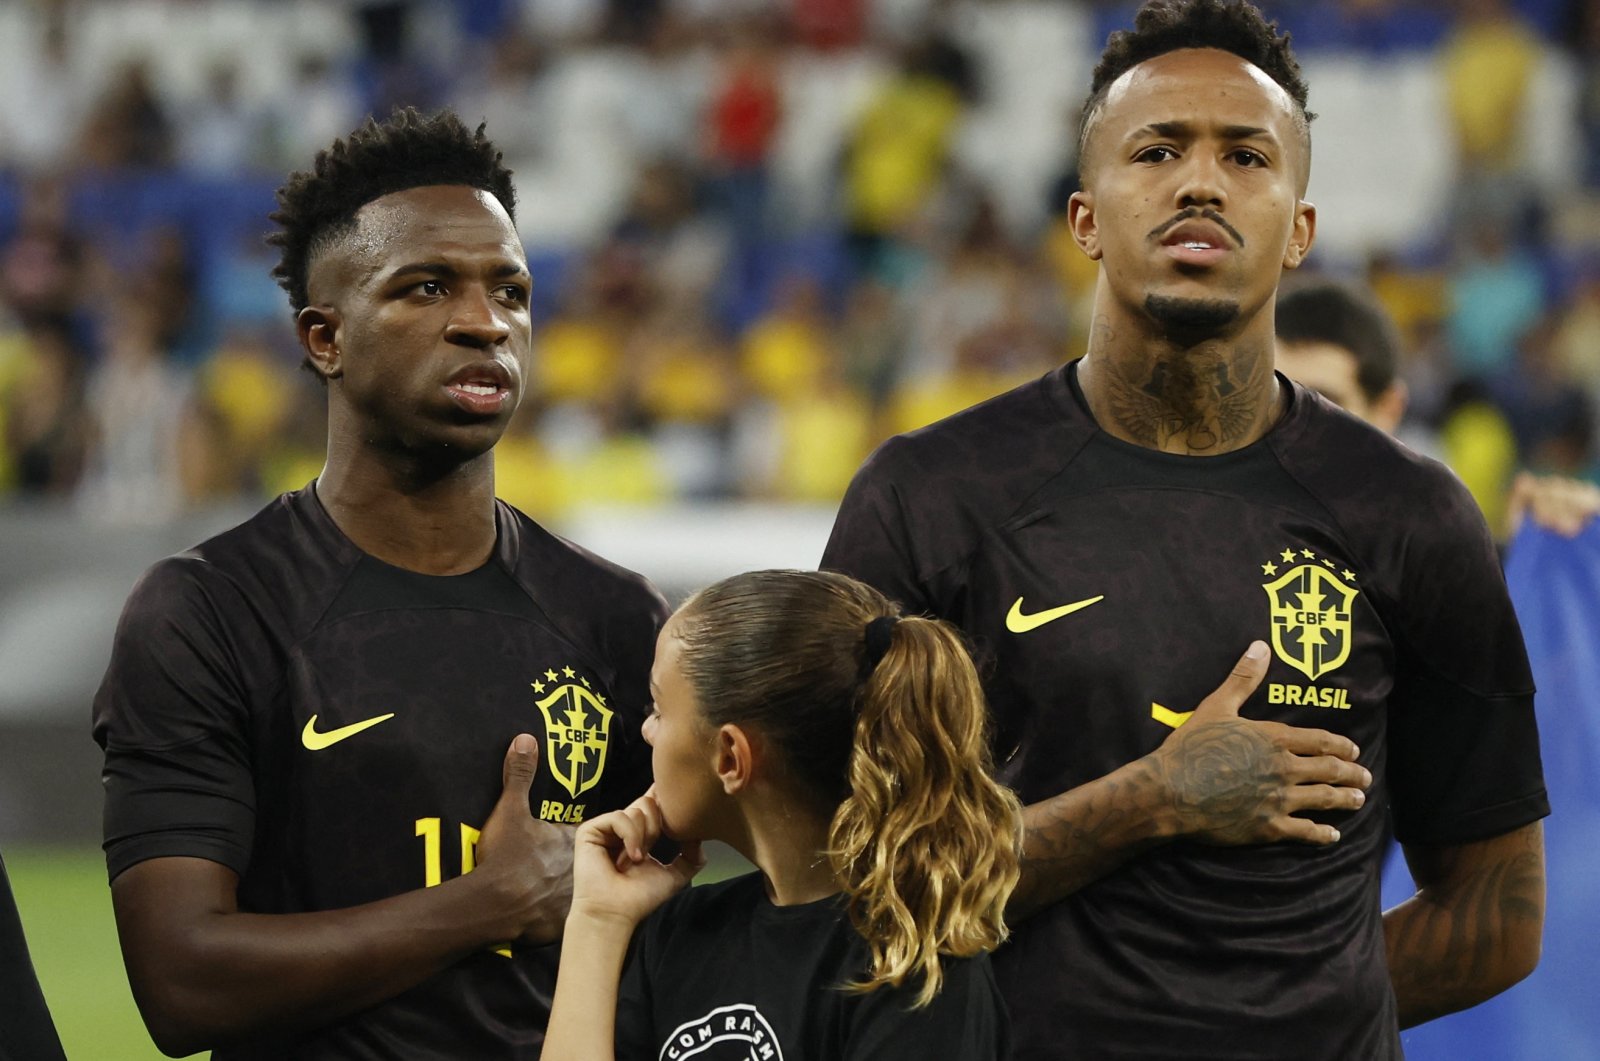 Brazil back Vinicius by wearing black kit in anti-racism friendly